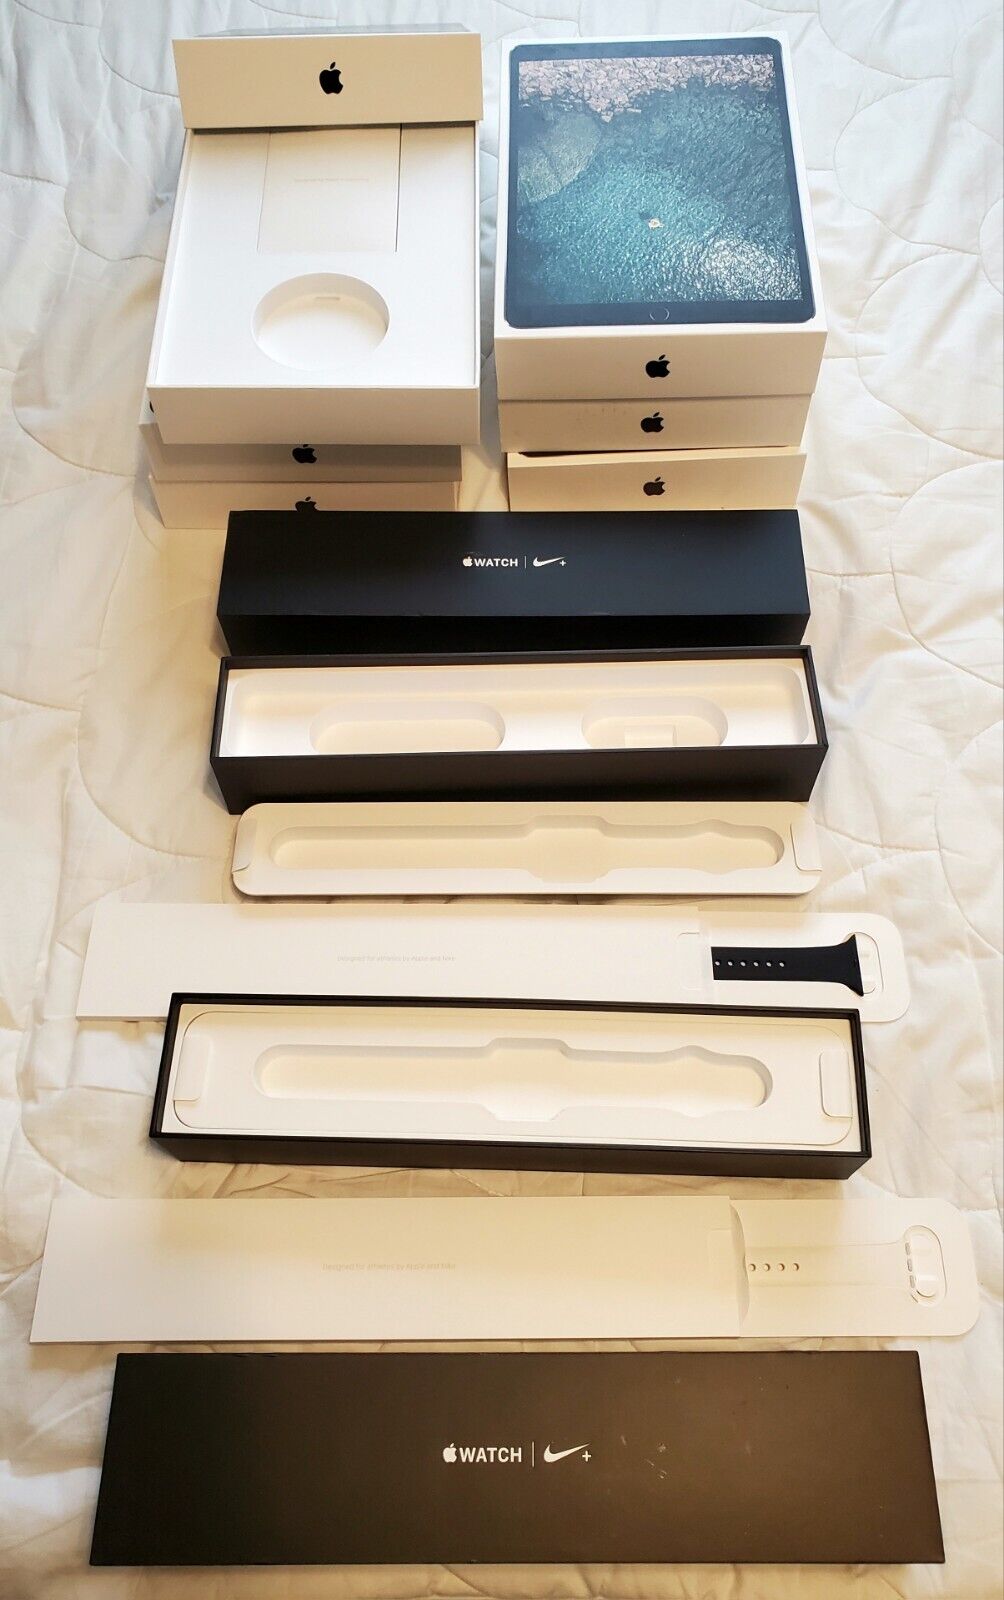 iPad Pro 10.5 Empty Box Lot Of 6 & Nike Apple Watch Empty Box Lot Of 2 & Papers 